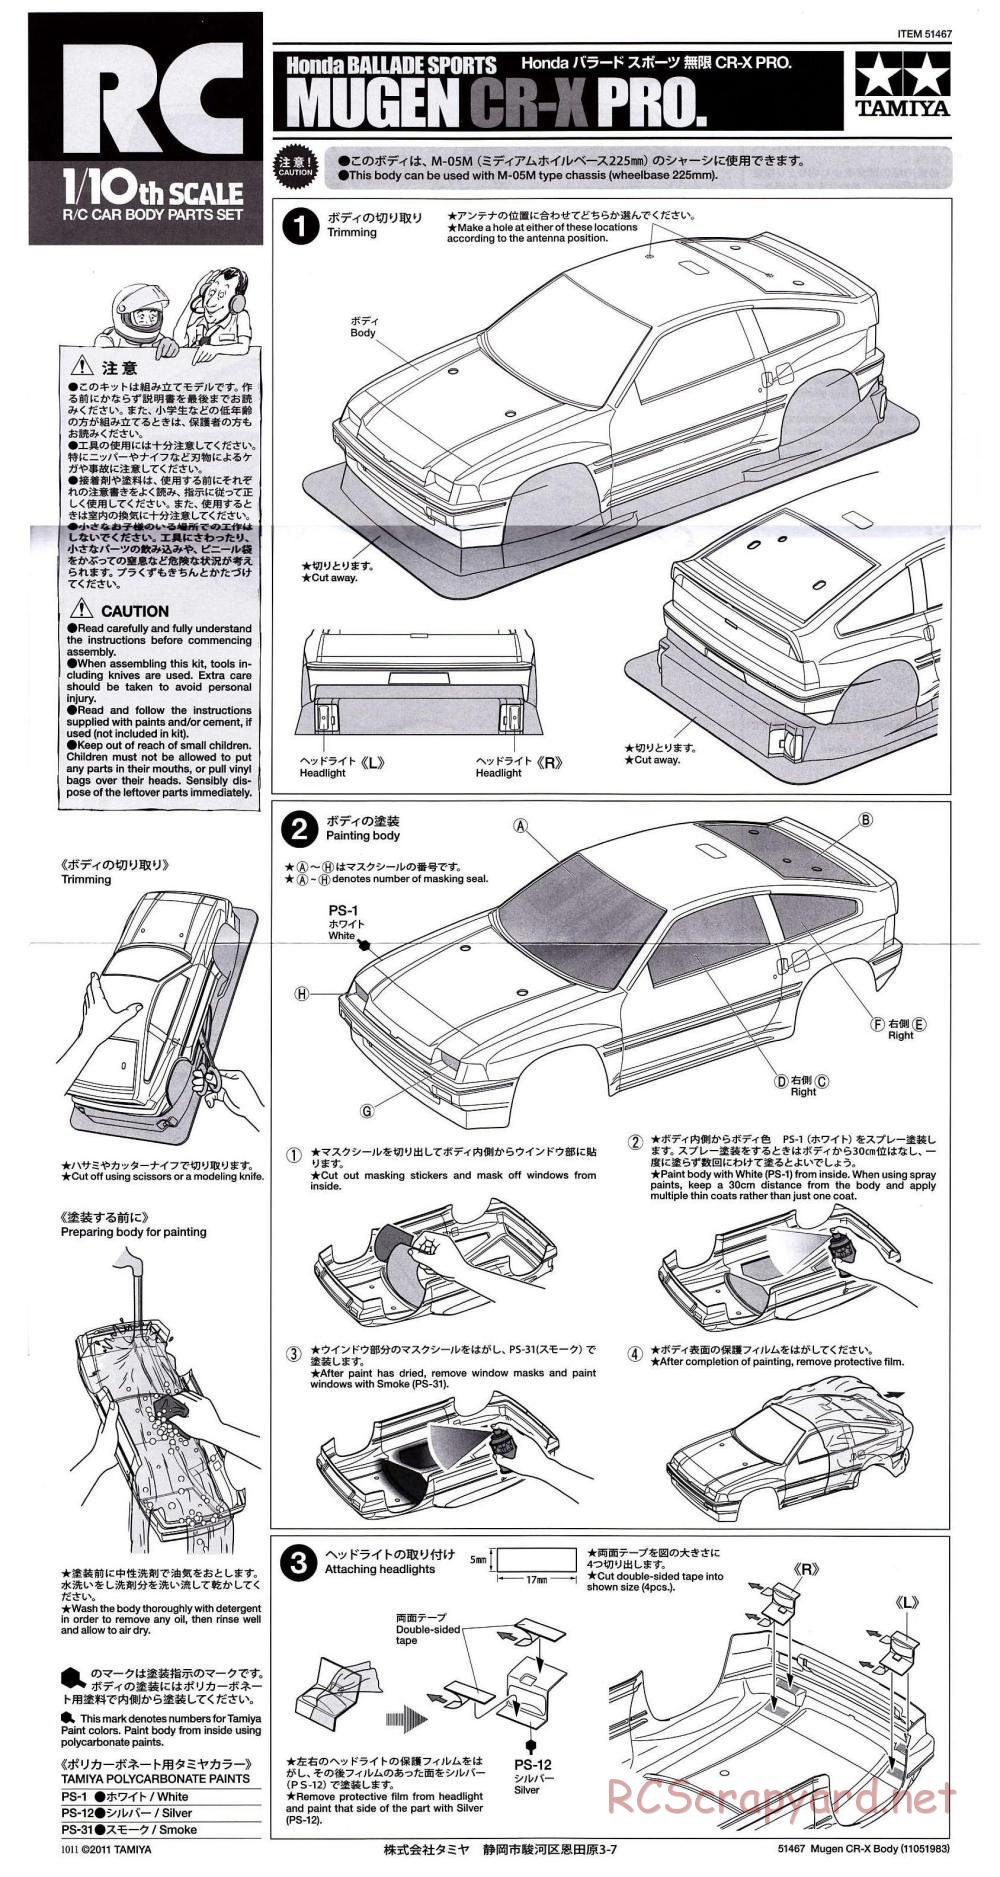 Tamiya - Honda Ballade Sports Mugen CR-X Pro - M-05 Chassis - Body Manual - Page 1